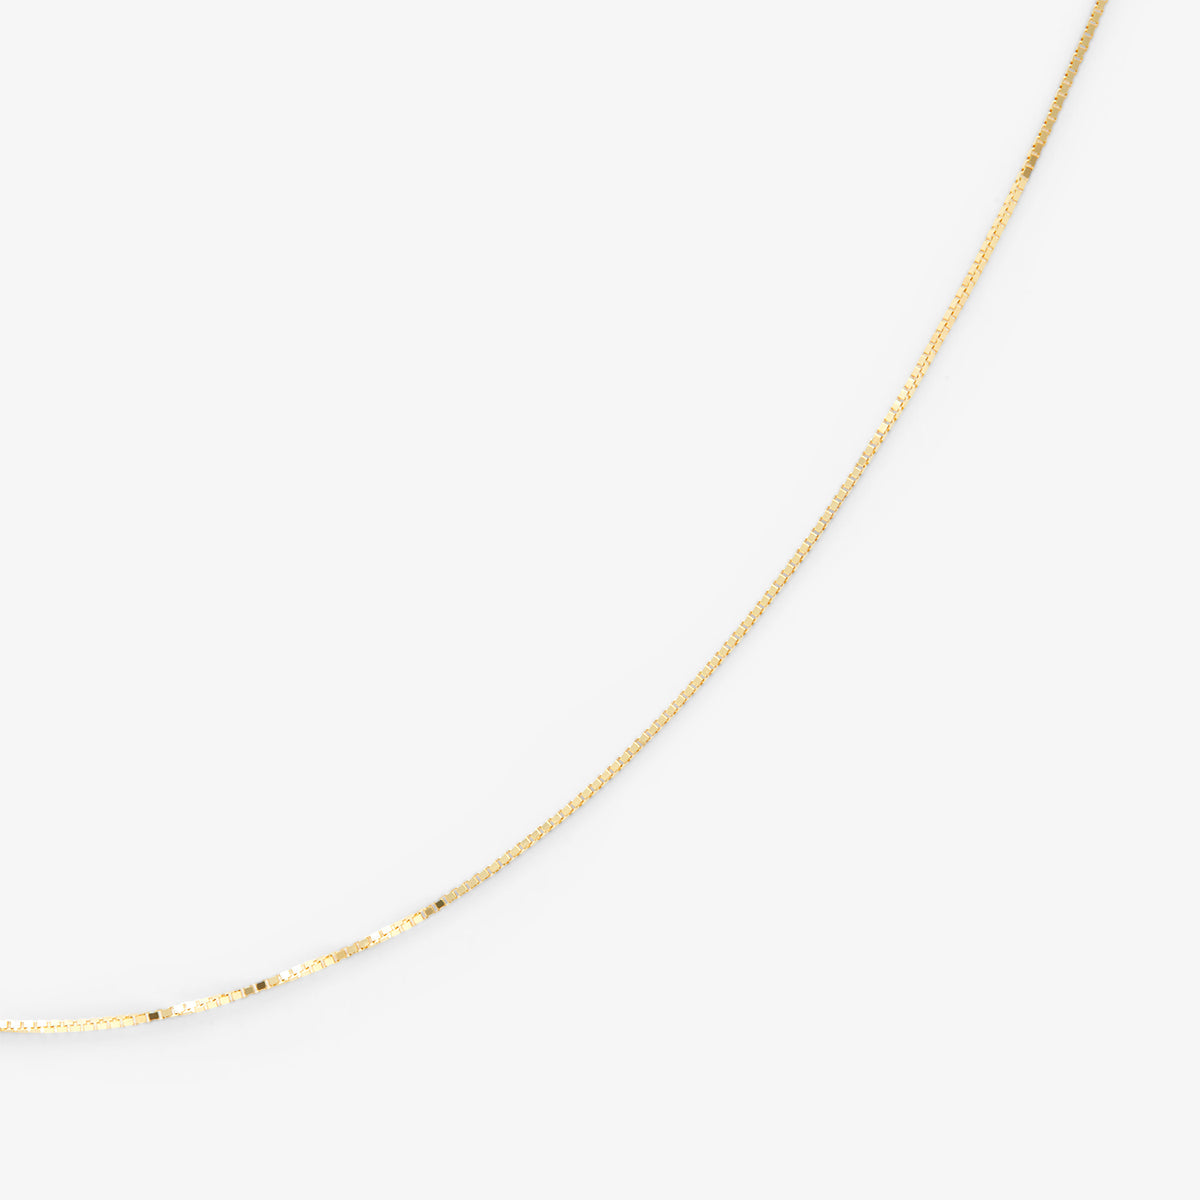 16" Slip Chain Necklace